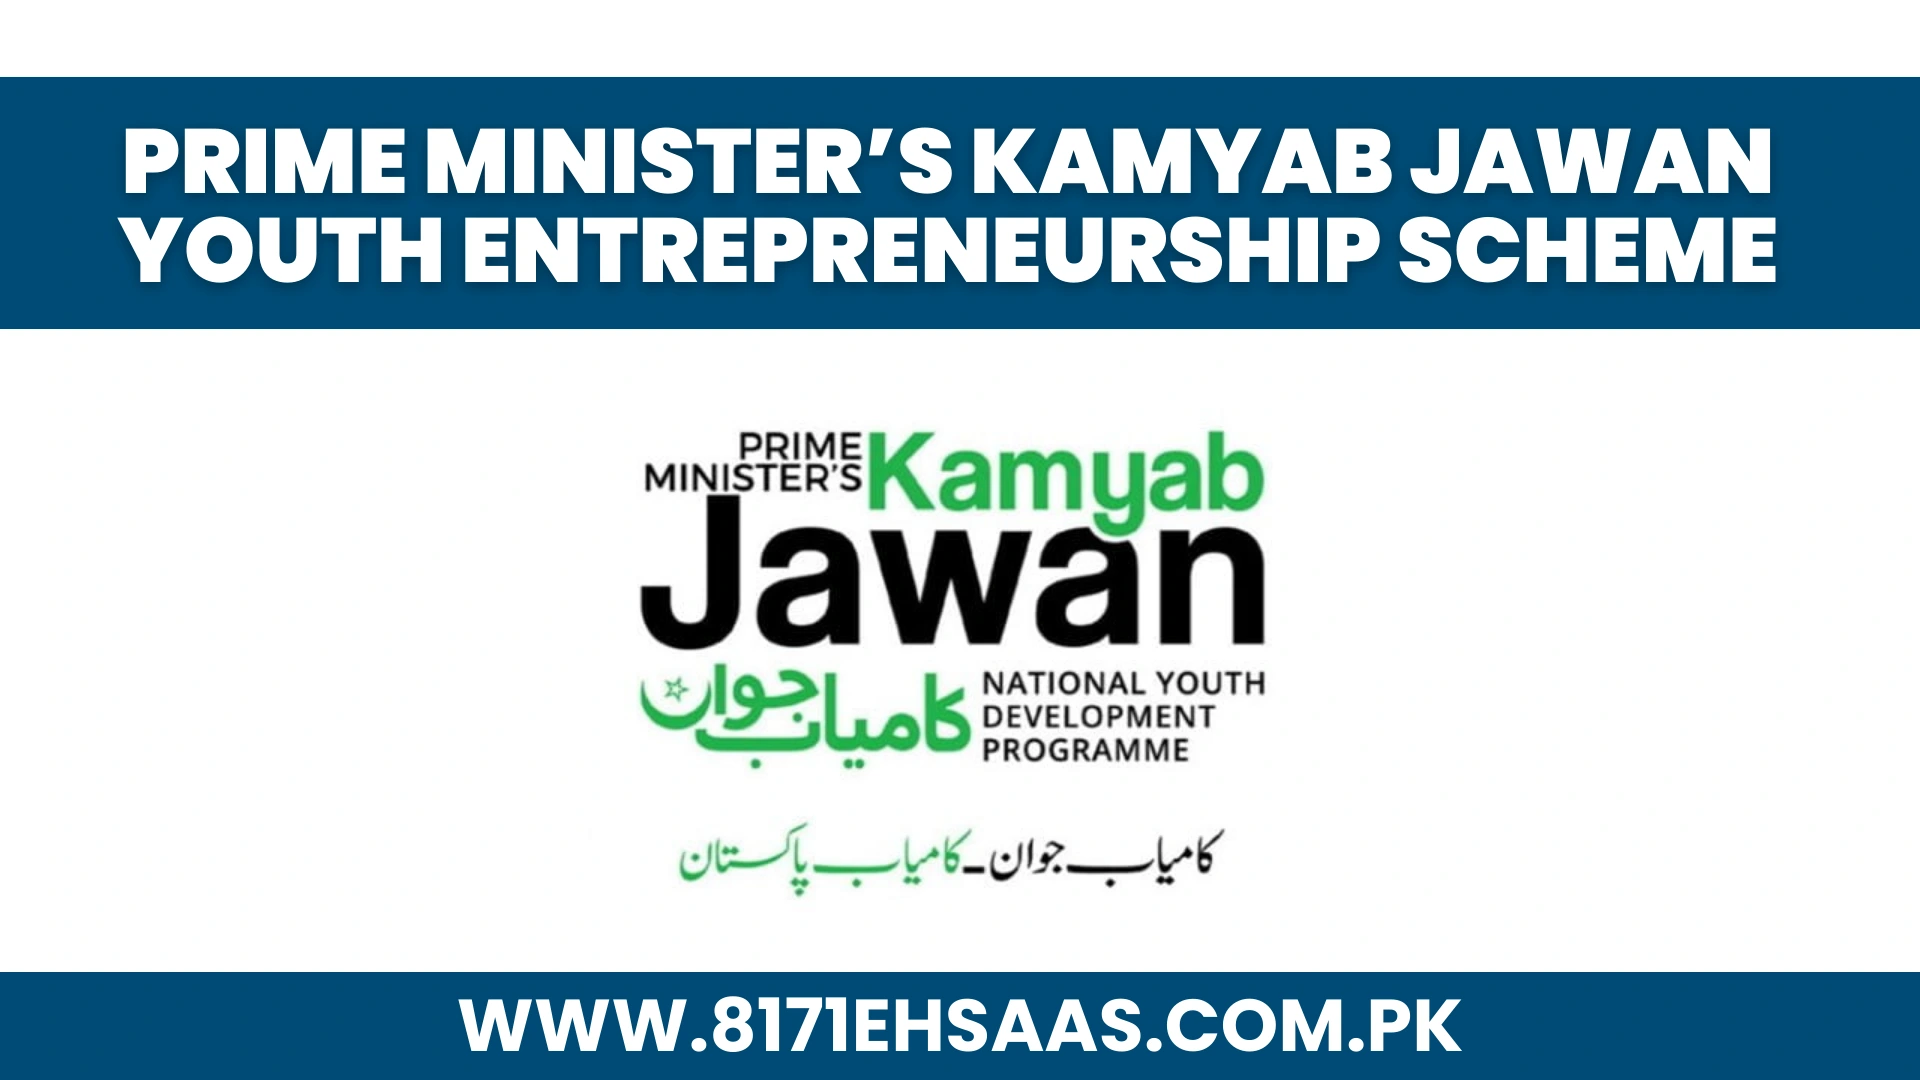 Prime Minister's Kamyab Jawan Youth Entrepreneurship Scheme